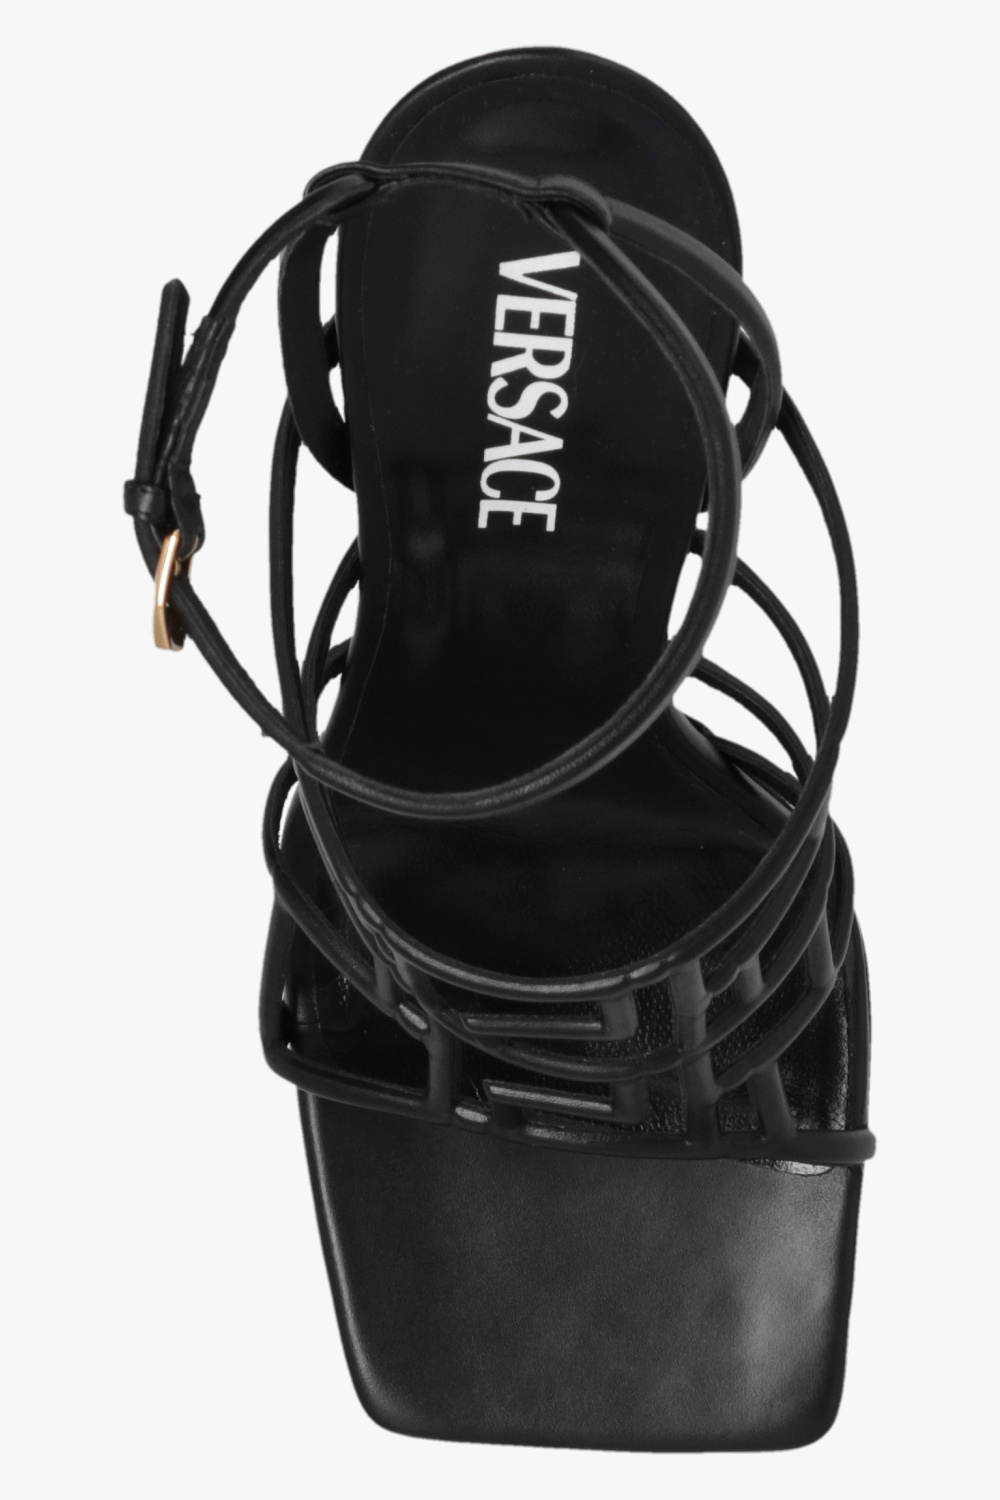 Versace adidas originals 2021 Marathon Running Shoes Sneakers B37571-2021